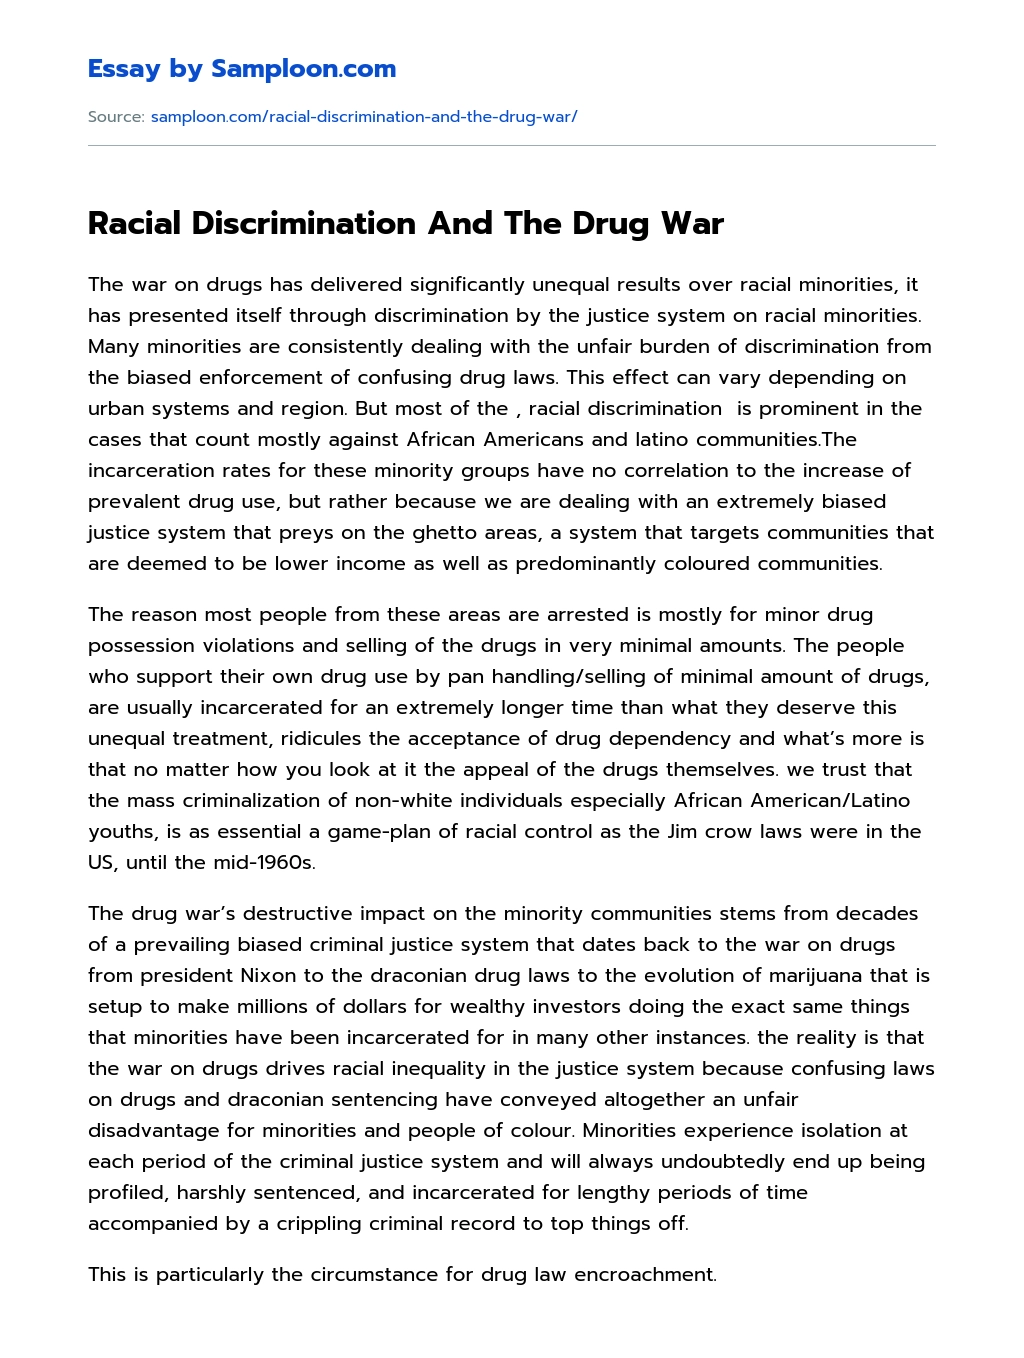 Racial Discrimination And The Drug War essay